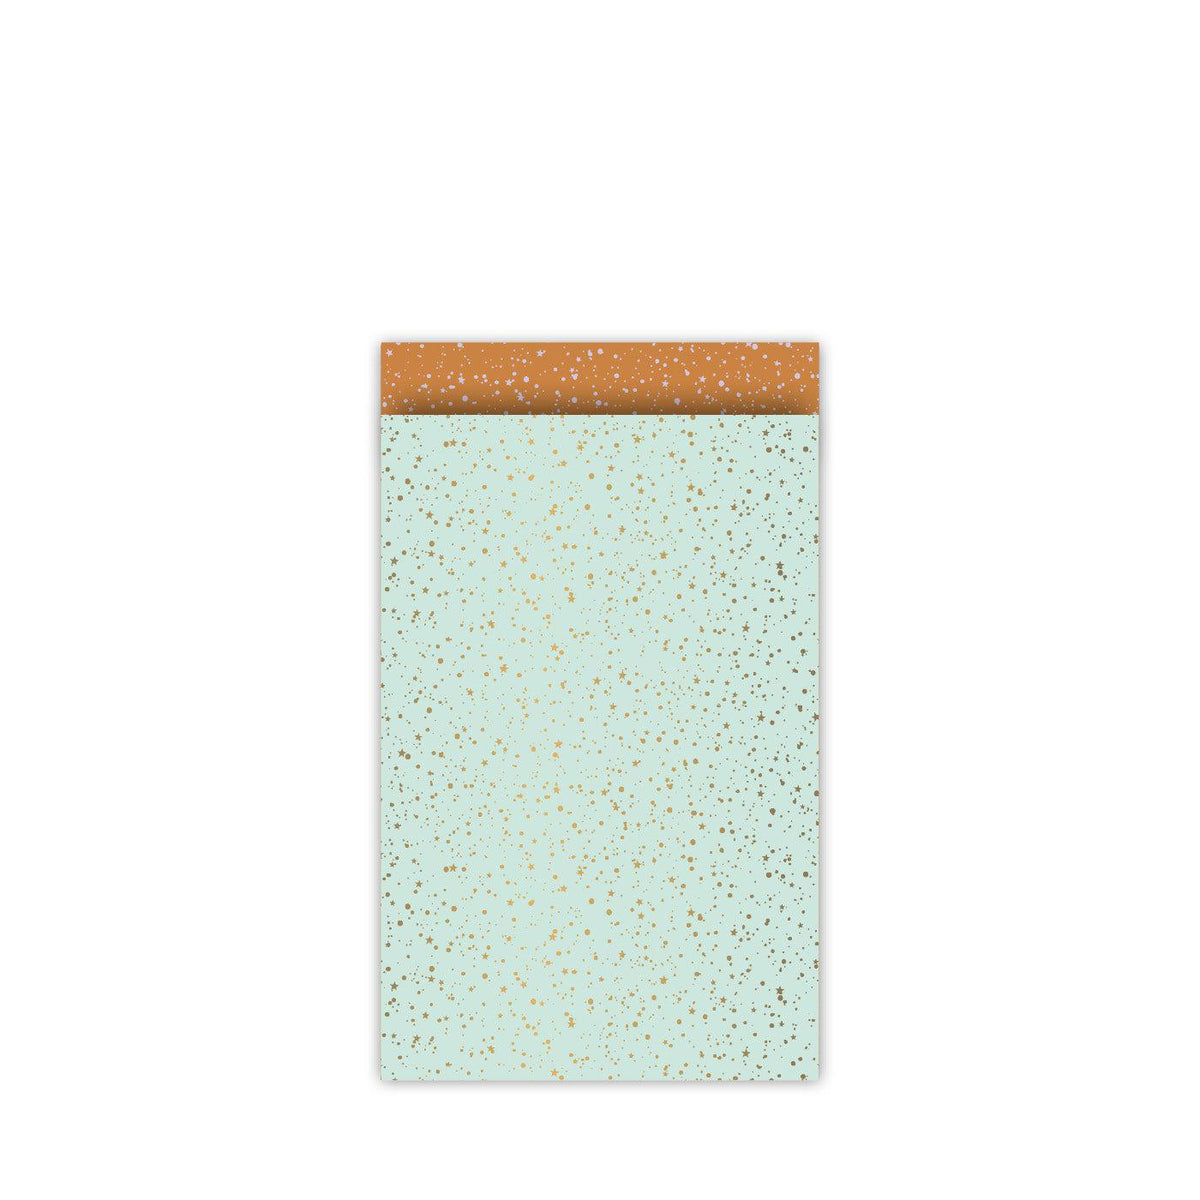 Cadeauzakjes Summer Sparkle mint/roest 12x19cm - 5 stuks-Gifts-Kraaltjes van Renate